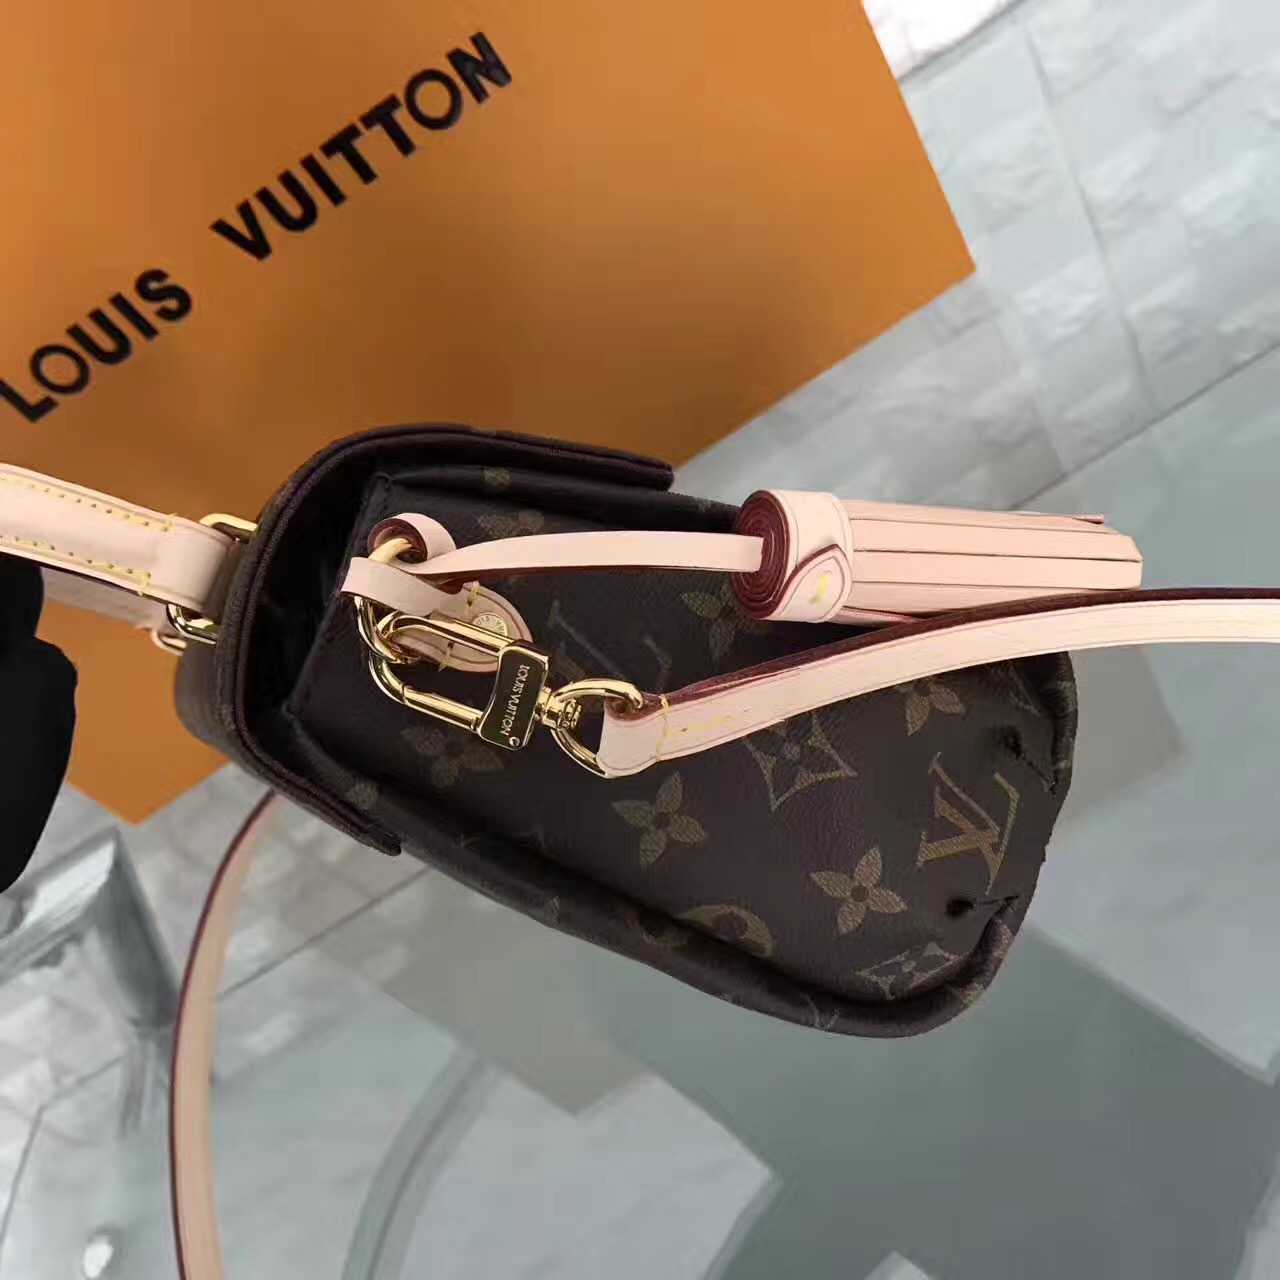 LV Louis Vuitton shoulder damier small handbags